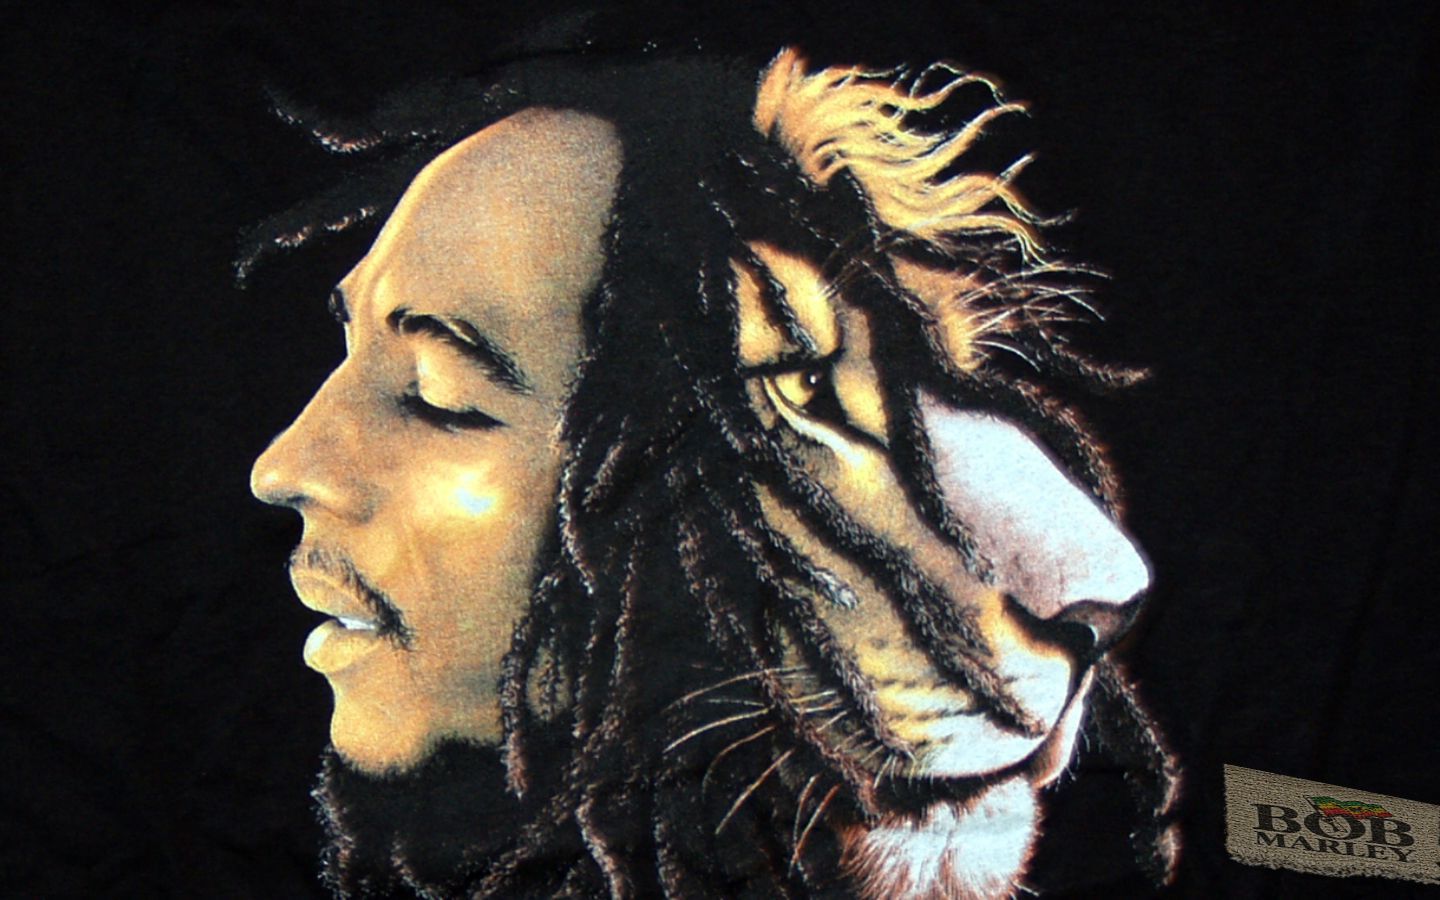 Bob Marley Computer Wallpapers, Desktop Backgrounds | 1440x900 ...